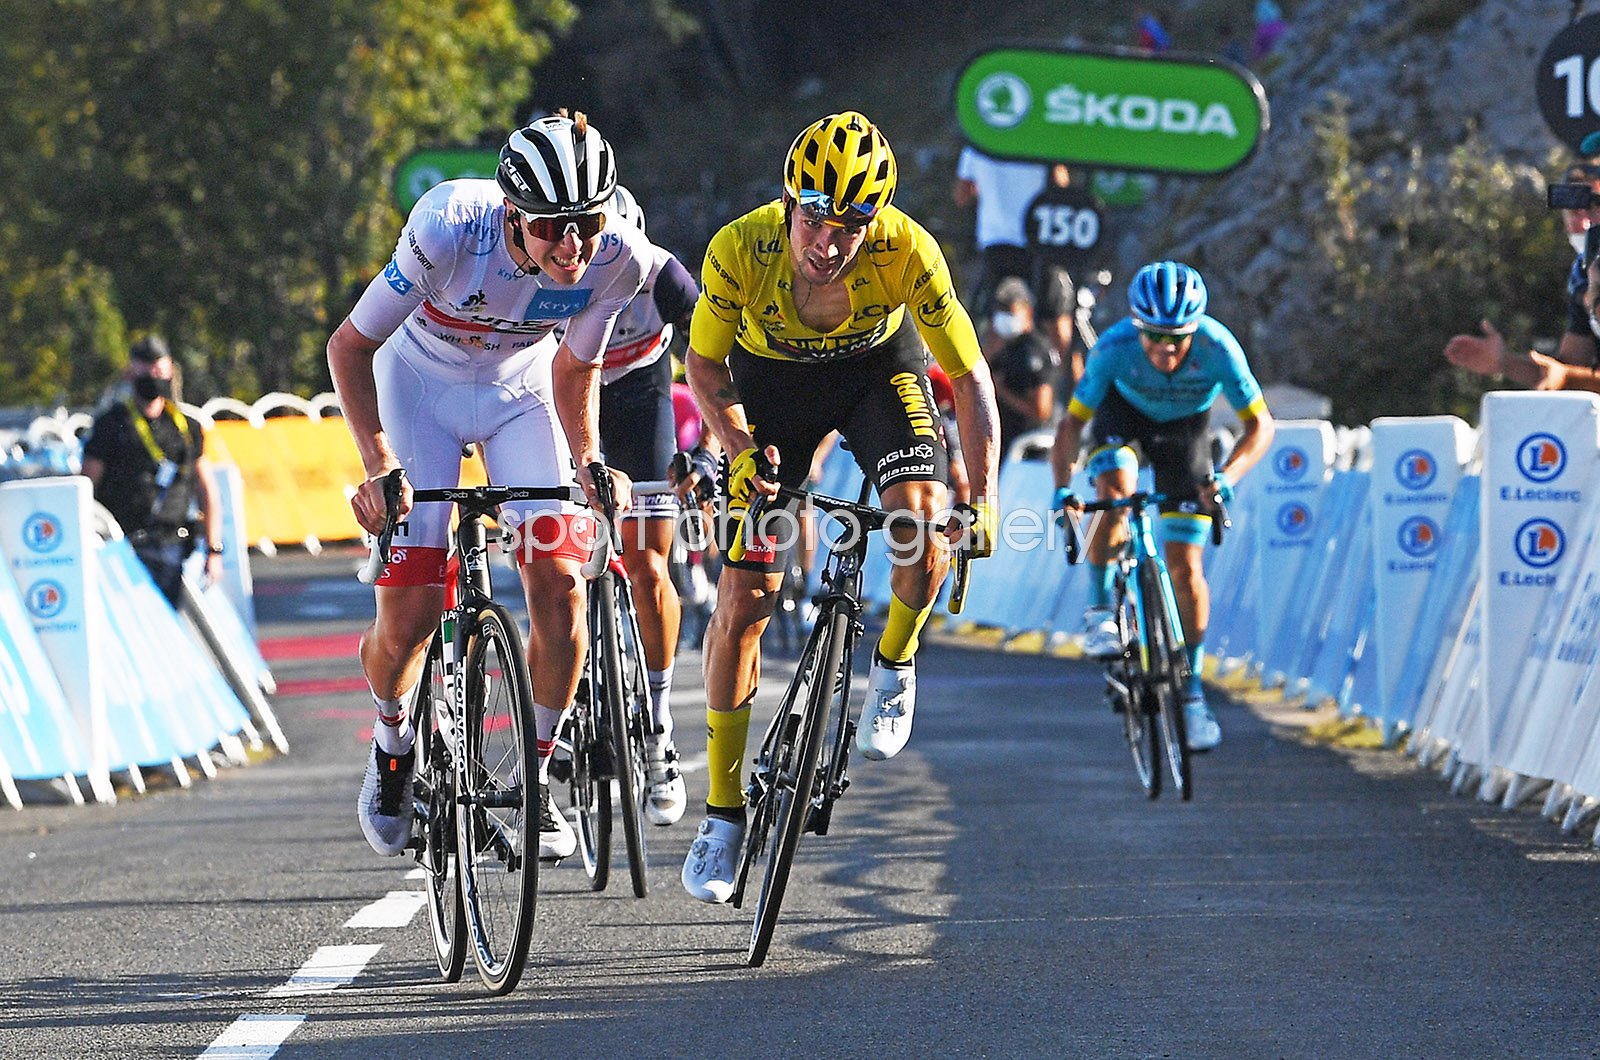 Tadej Pogacar beats Primoz Roglic Stage 15 Tour de France 2020 Image